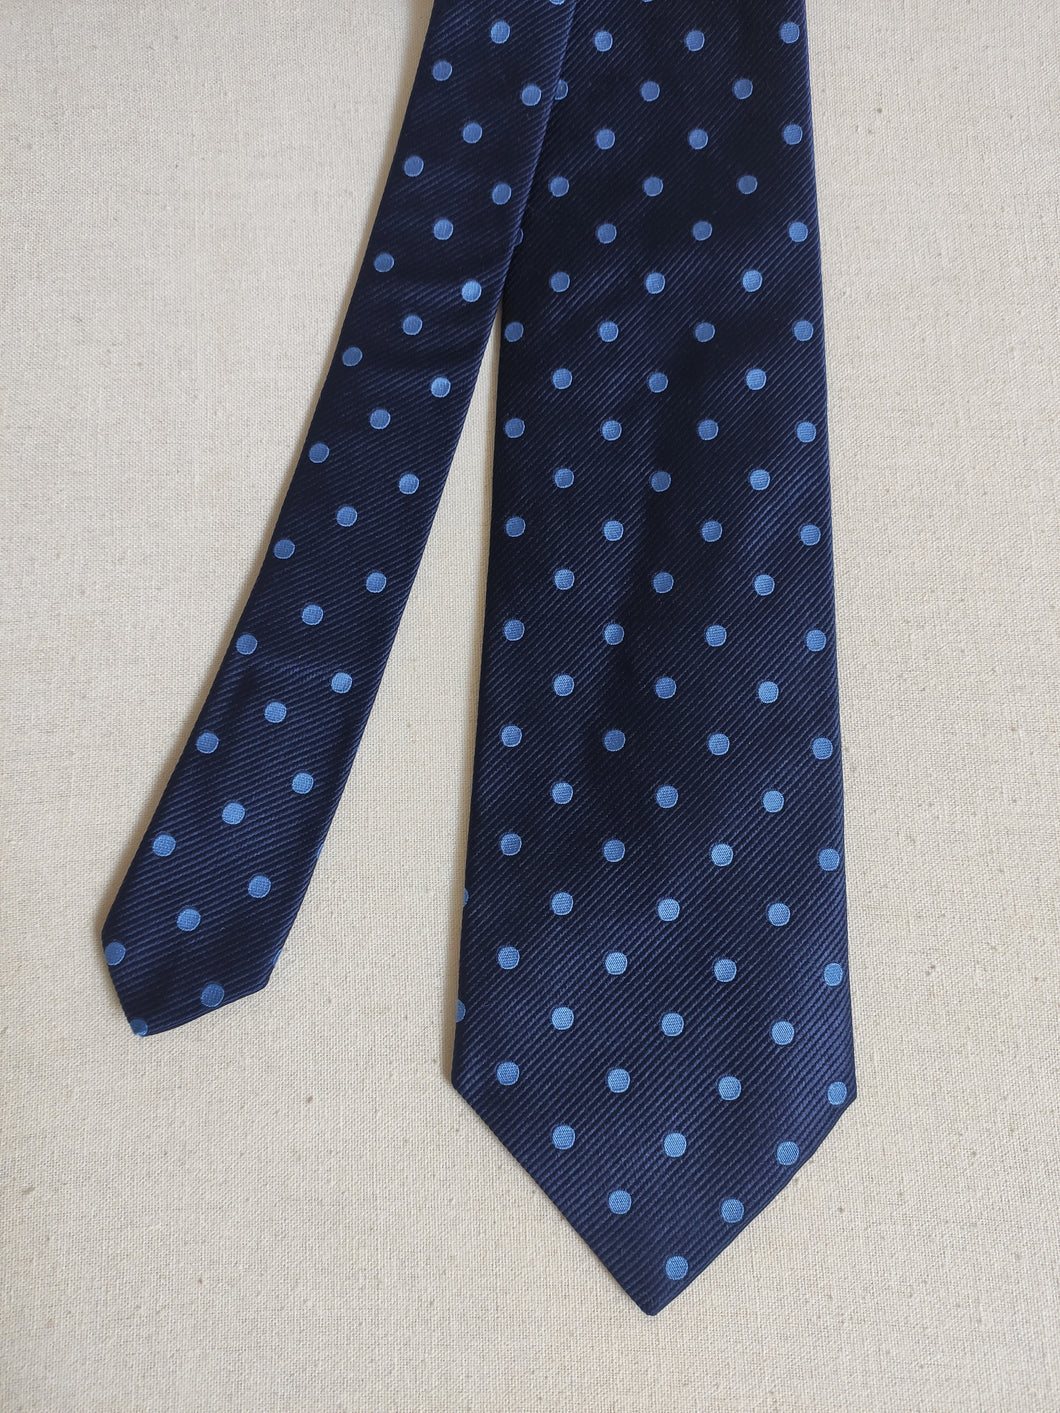 Berteil cravate bleue à pois en soie Made in England